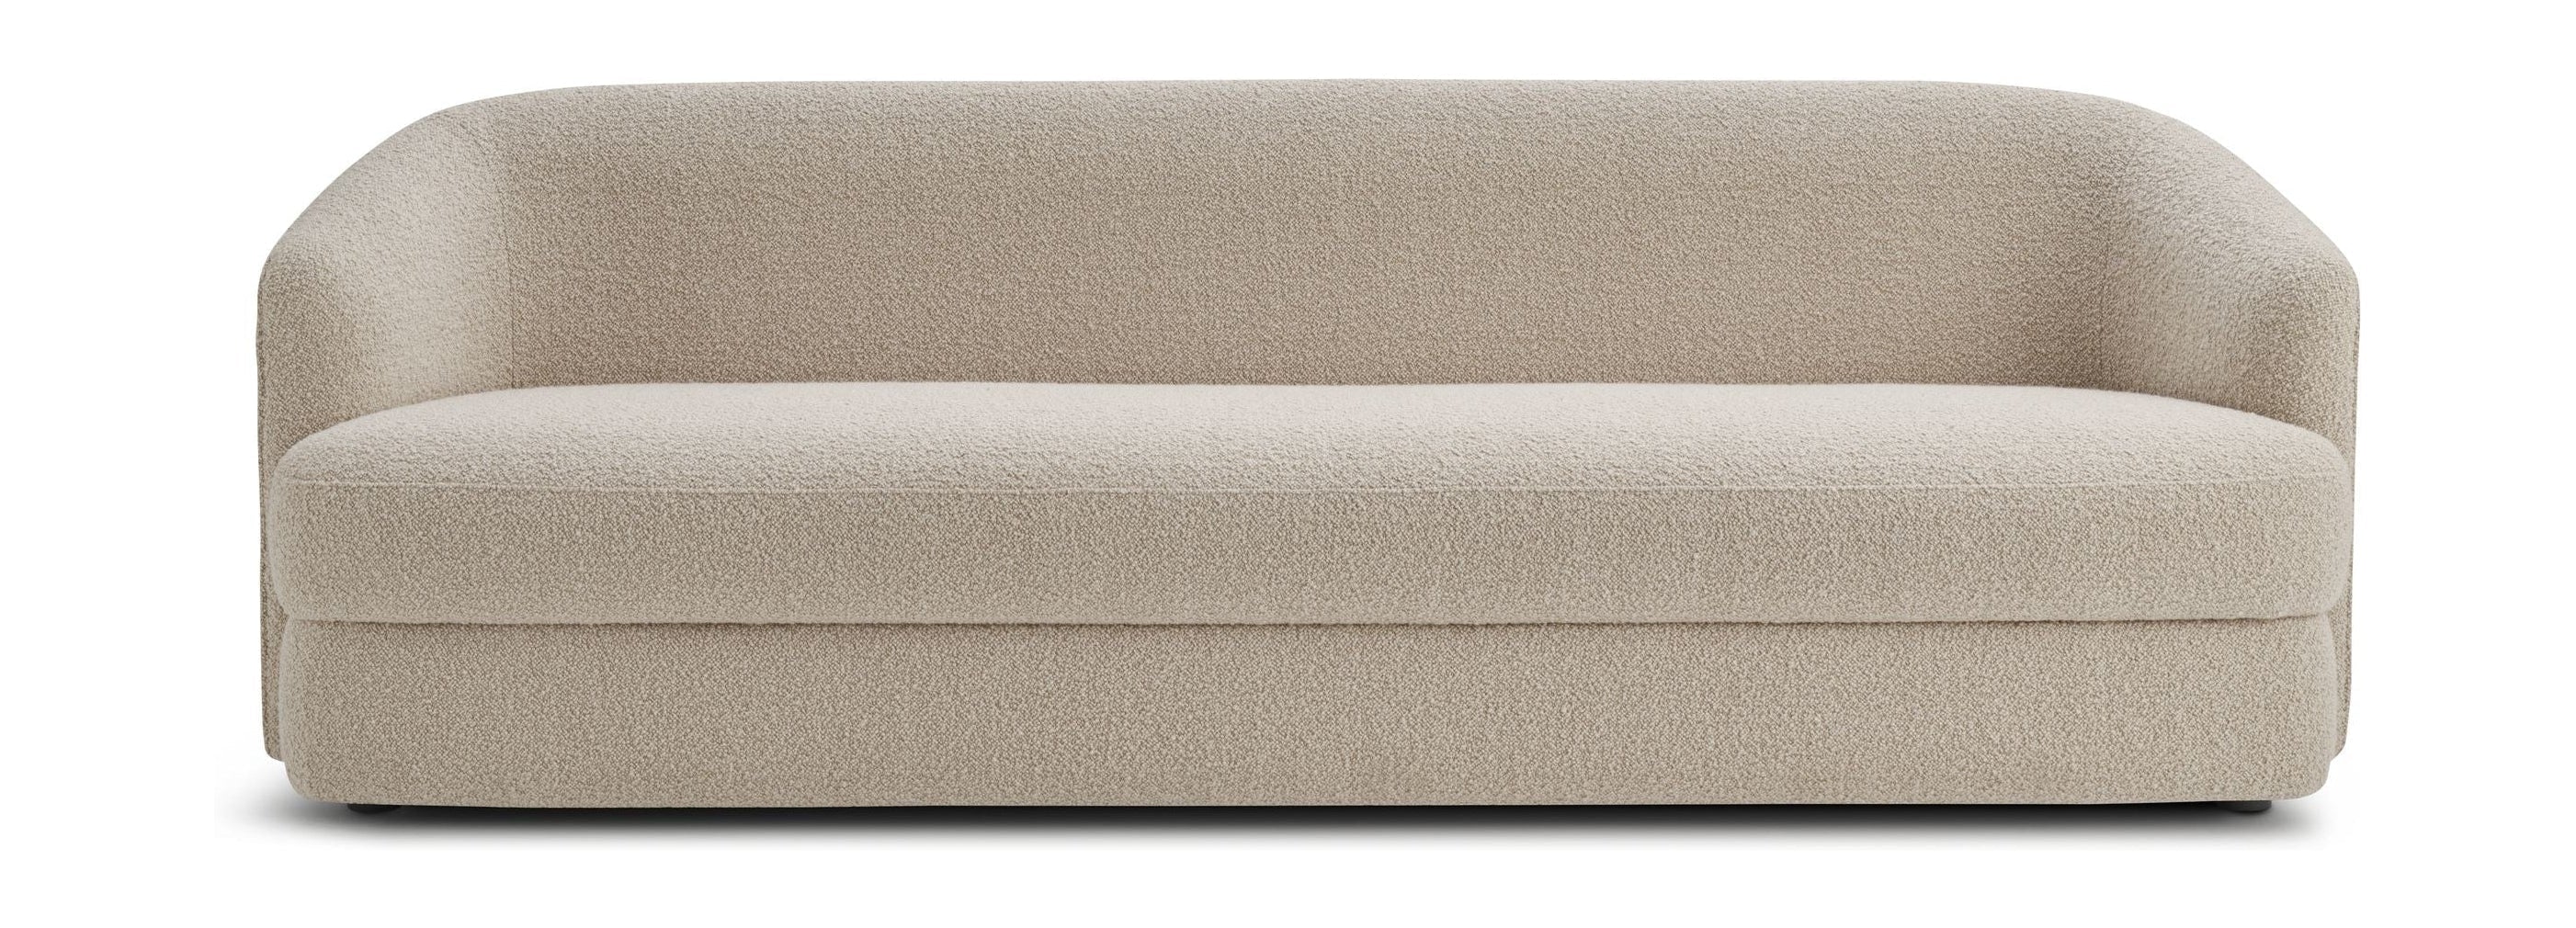 New Works covent sofa 3 sæder, sand